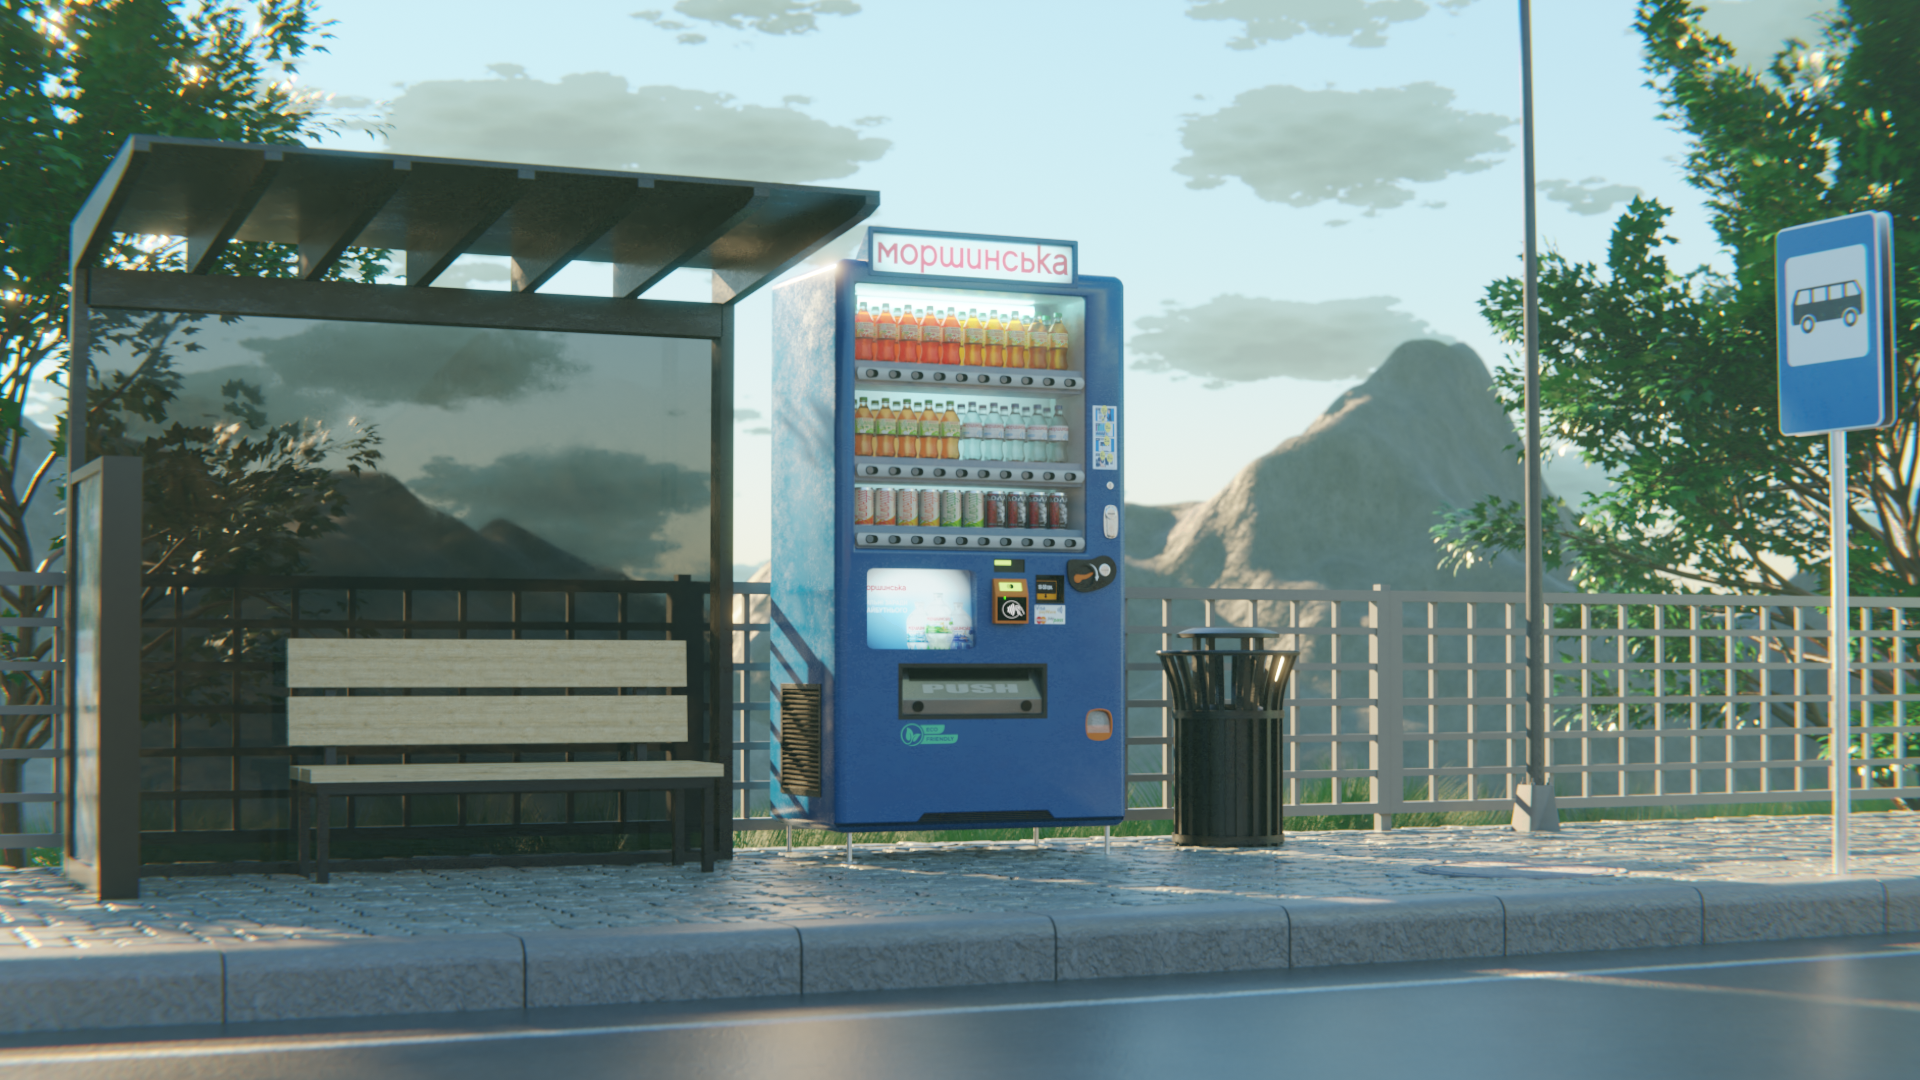 General 1920x1080 vending machine bus stop Blender street soda digital art sky clouds trash bin trees fence bench